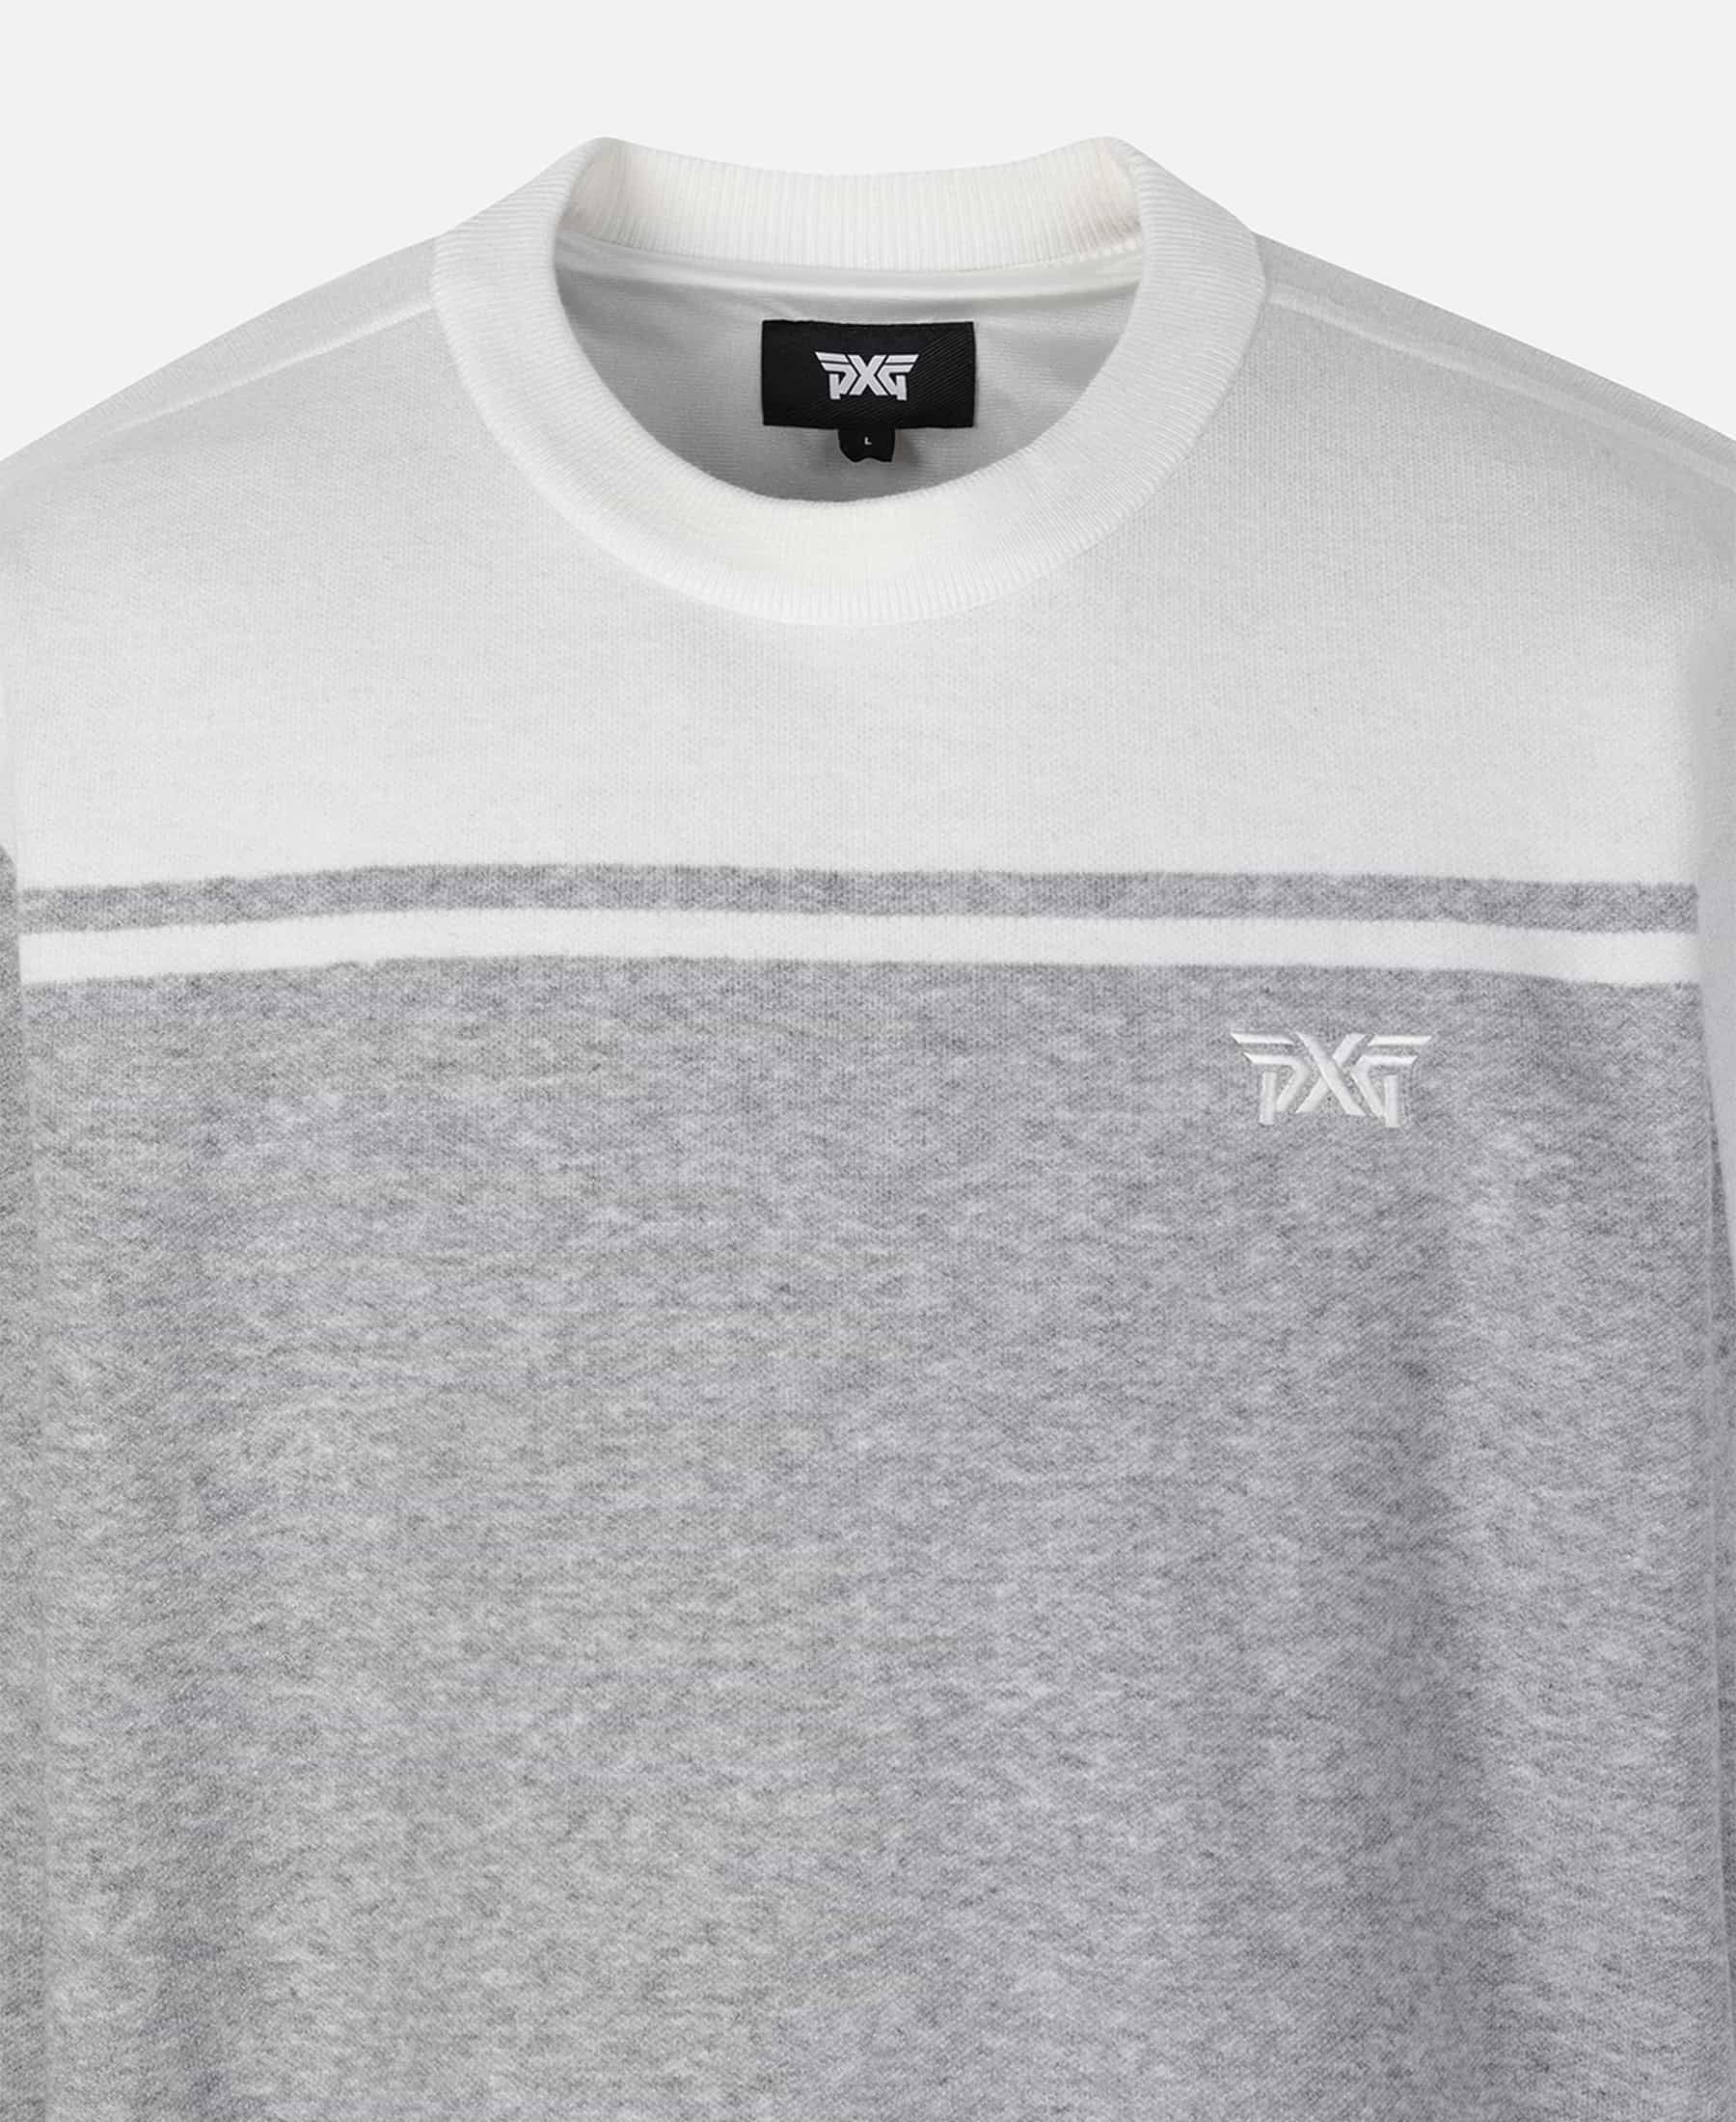 Shop Men's Golf Sweaters, Sweatshirts and Hoodies | PXG JP